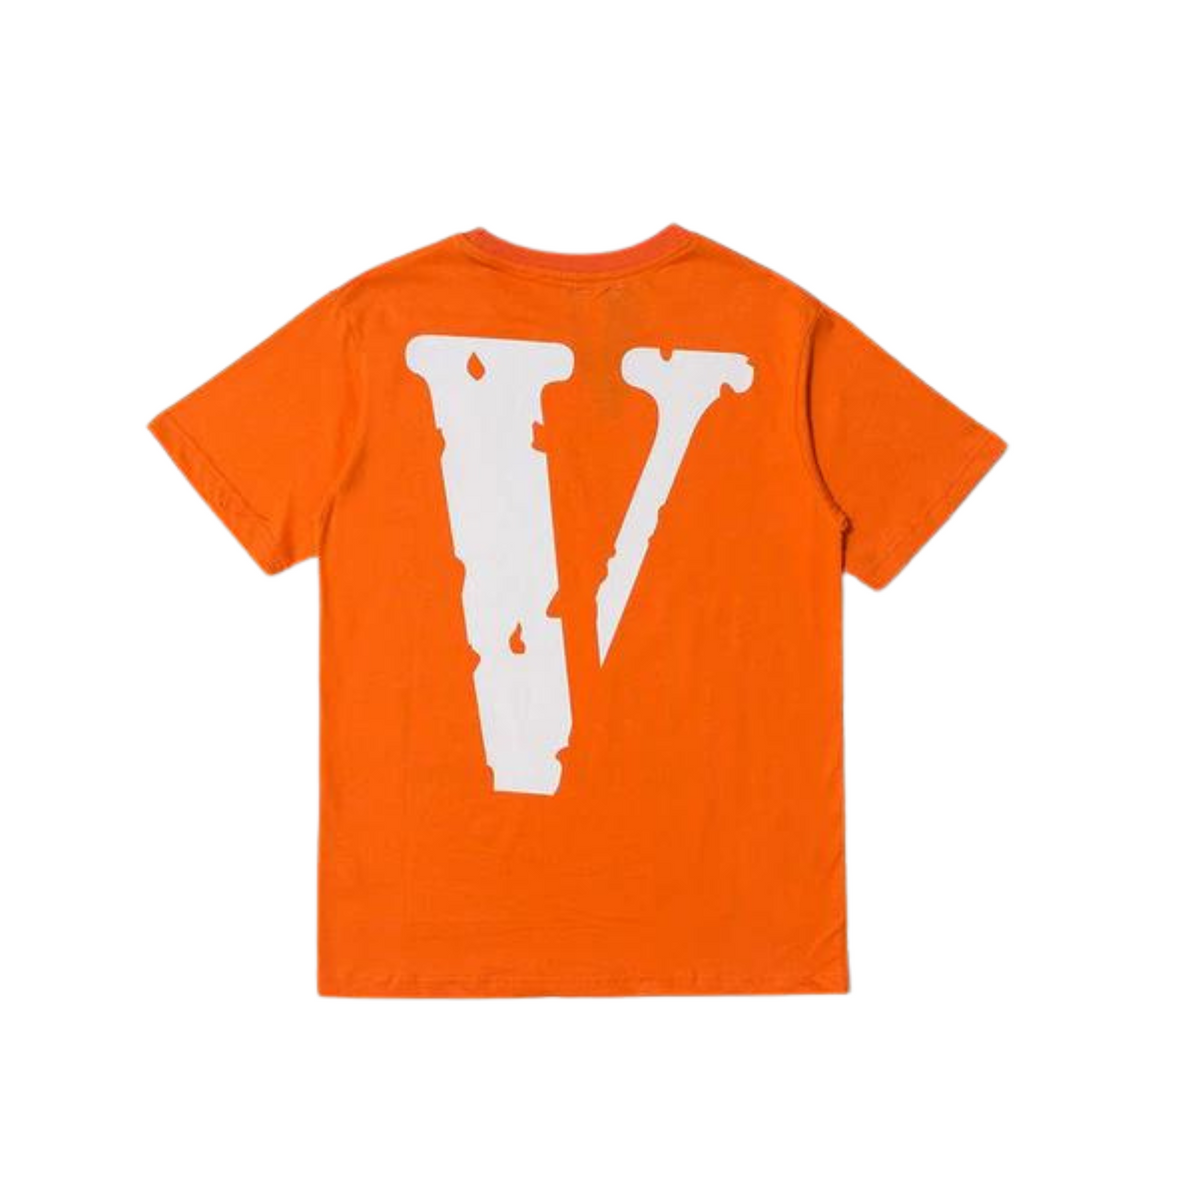 Vlone Staple T-shirt "Orange/White"